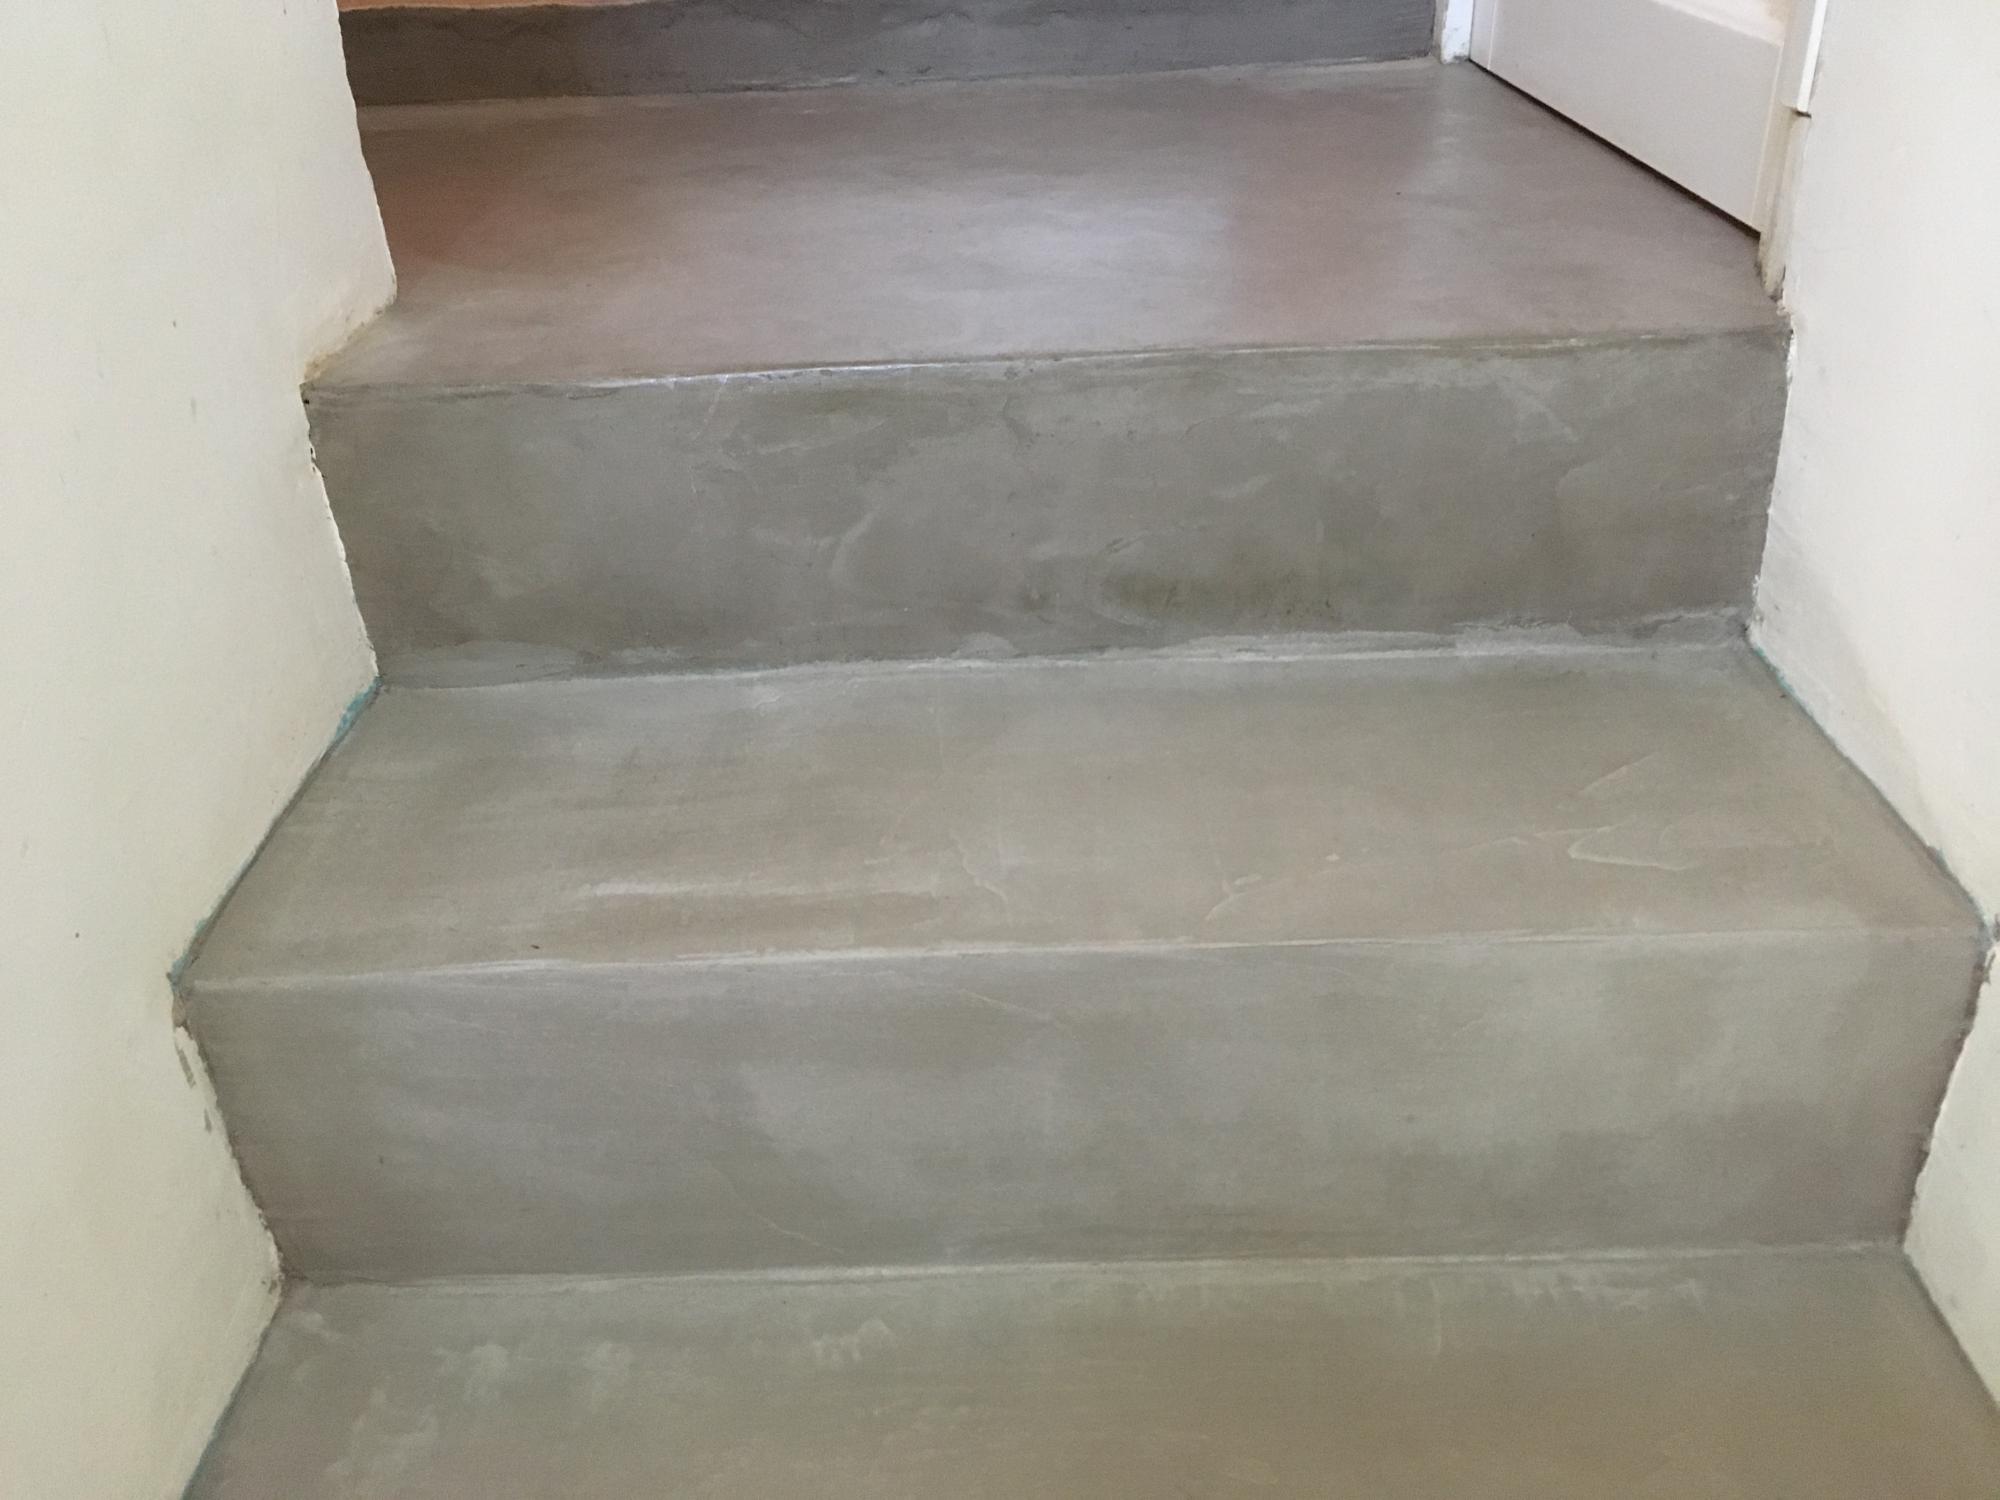 escalier beton cire aubagne